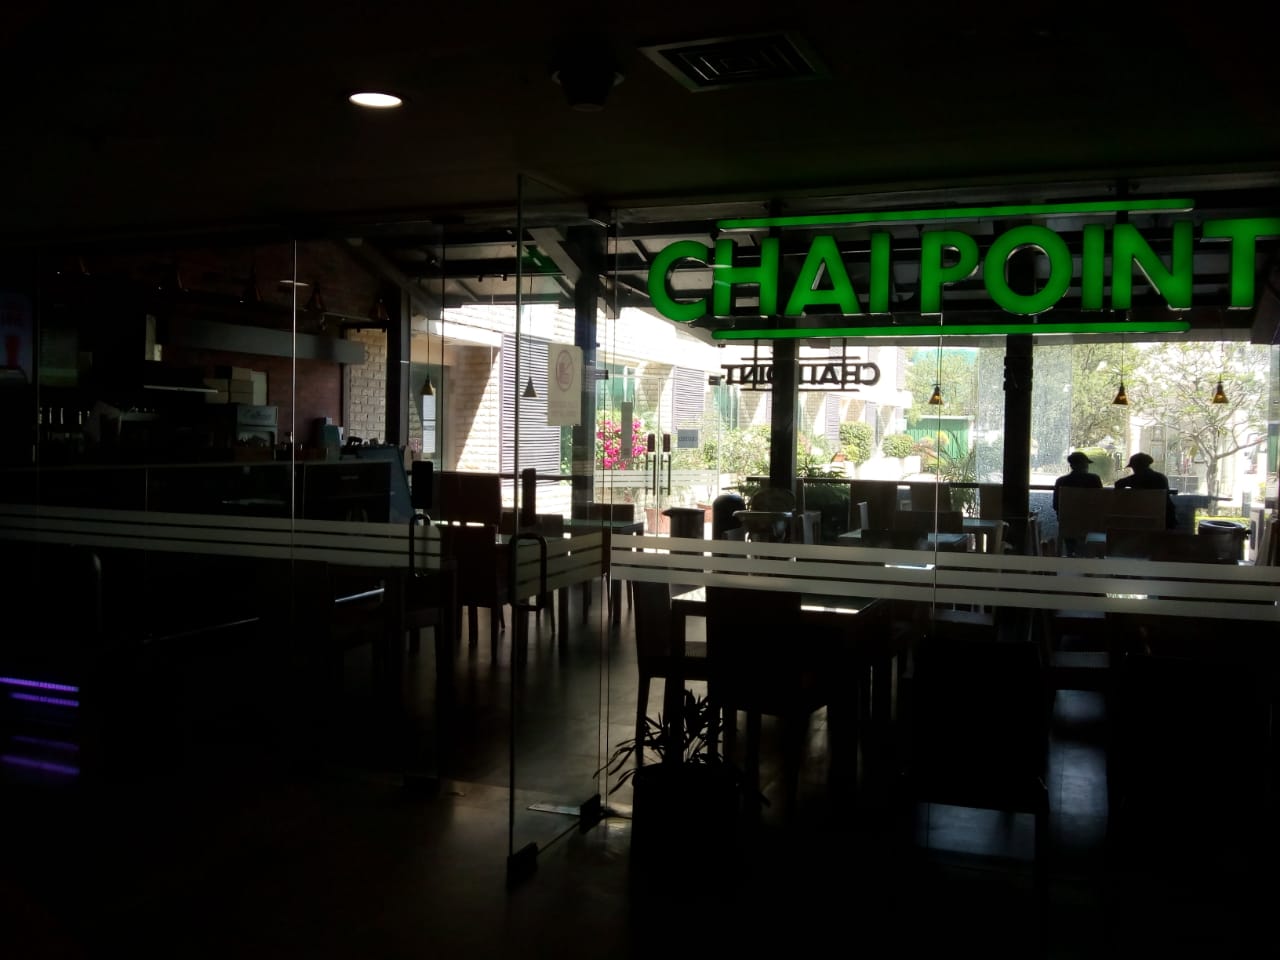 Chai Point - Sushant Lok Cafe - Sector 43, Gurgaon